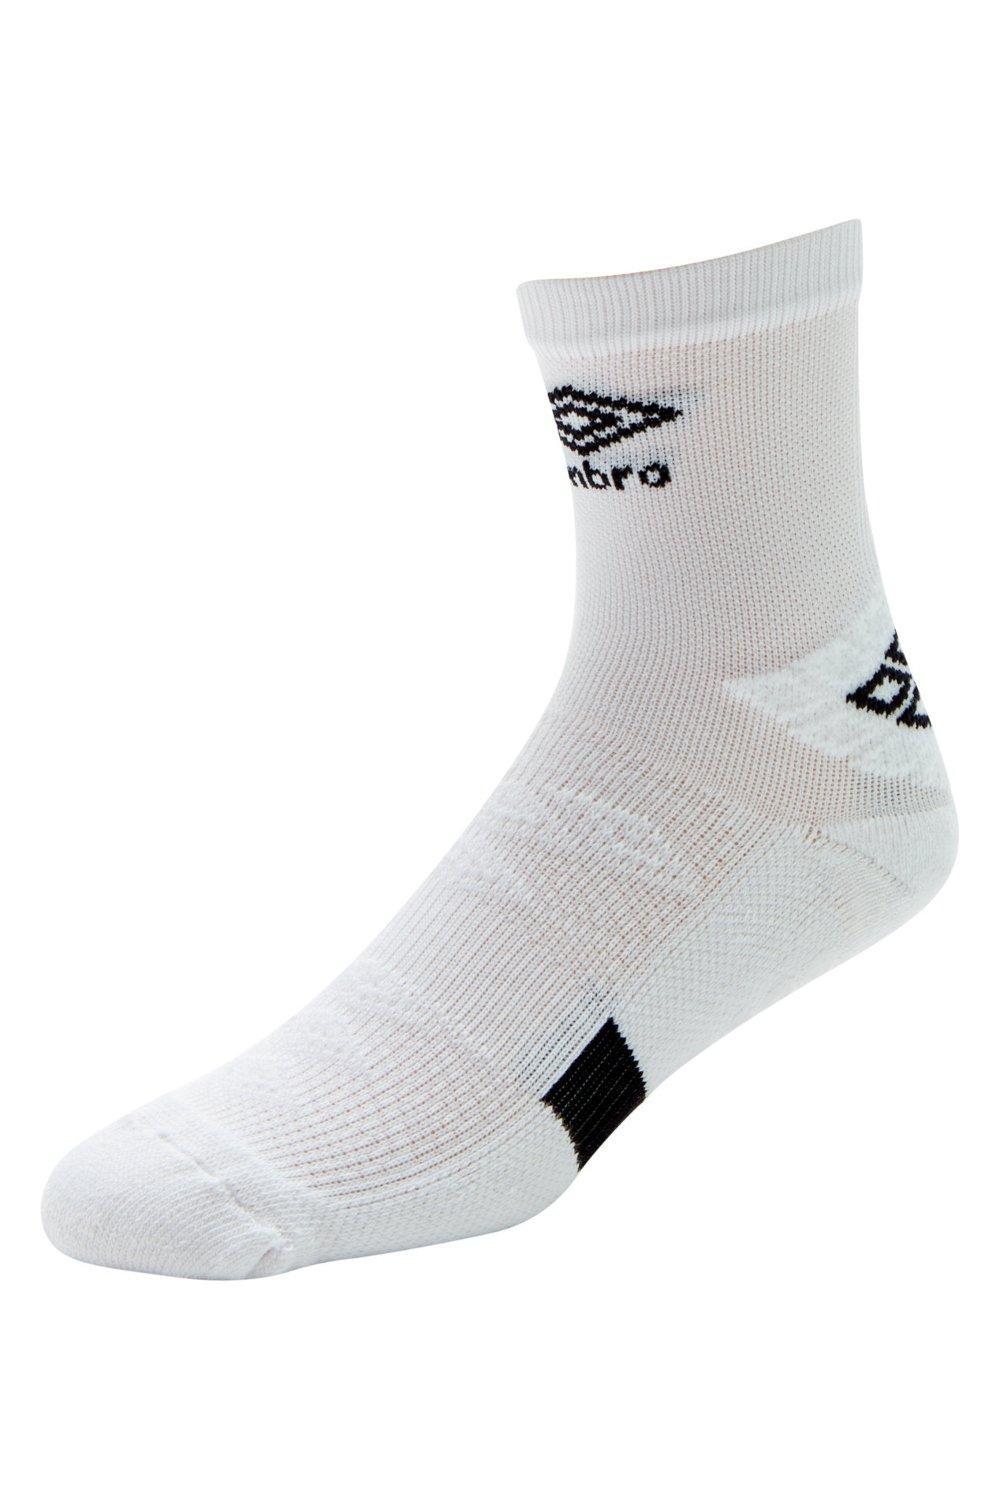 Pro Protex Grip Sock